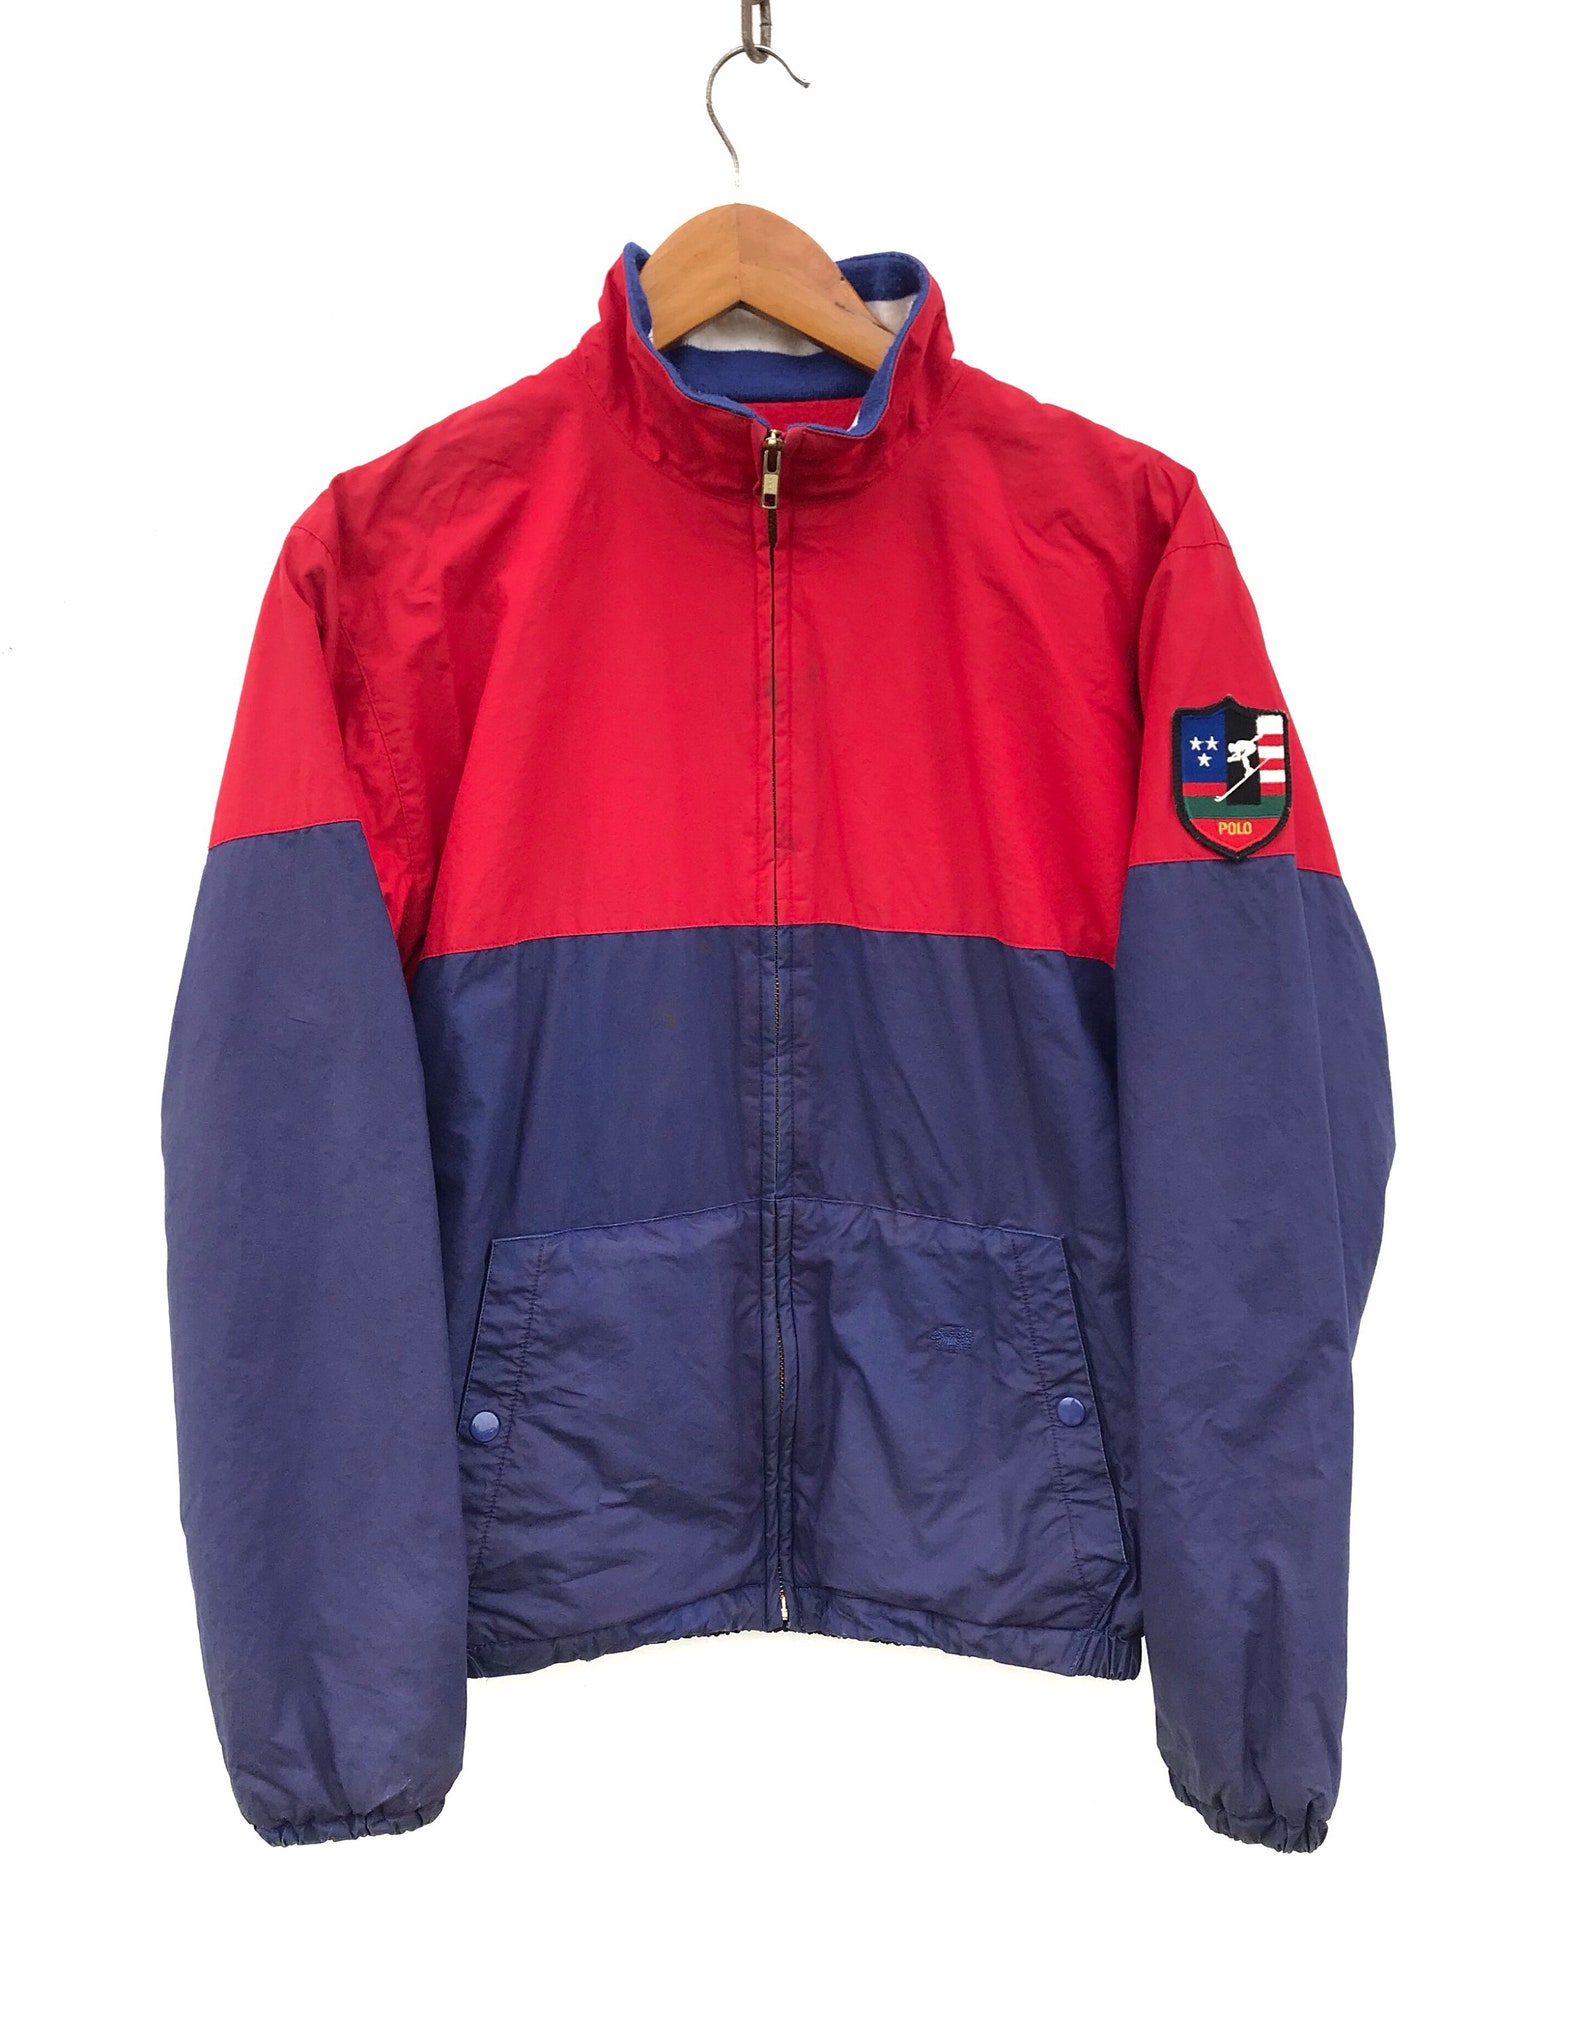 Polo Ski Polo Ralph Lauren jacket vintage Ralph Lauren puffer | Etsy